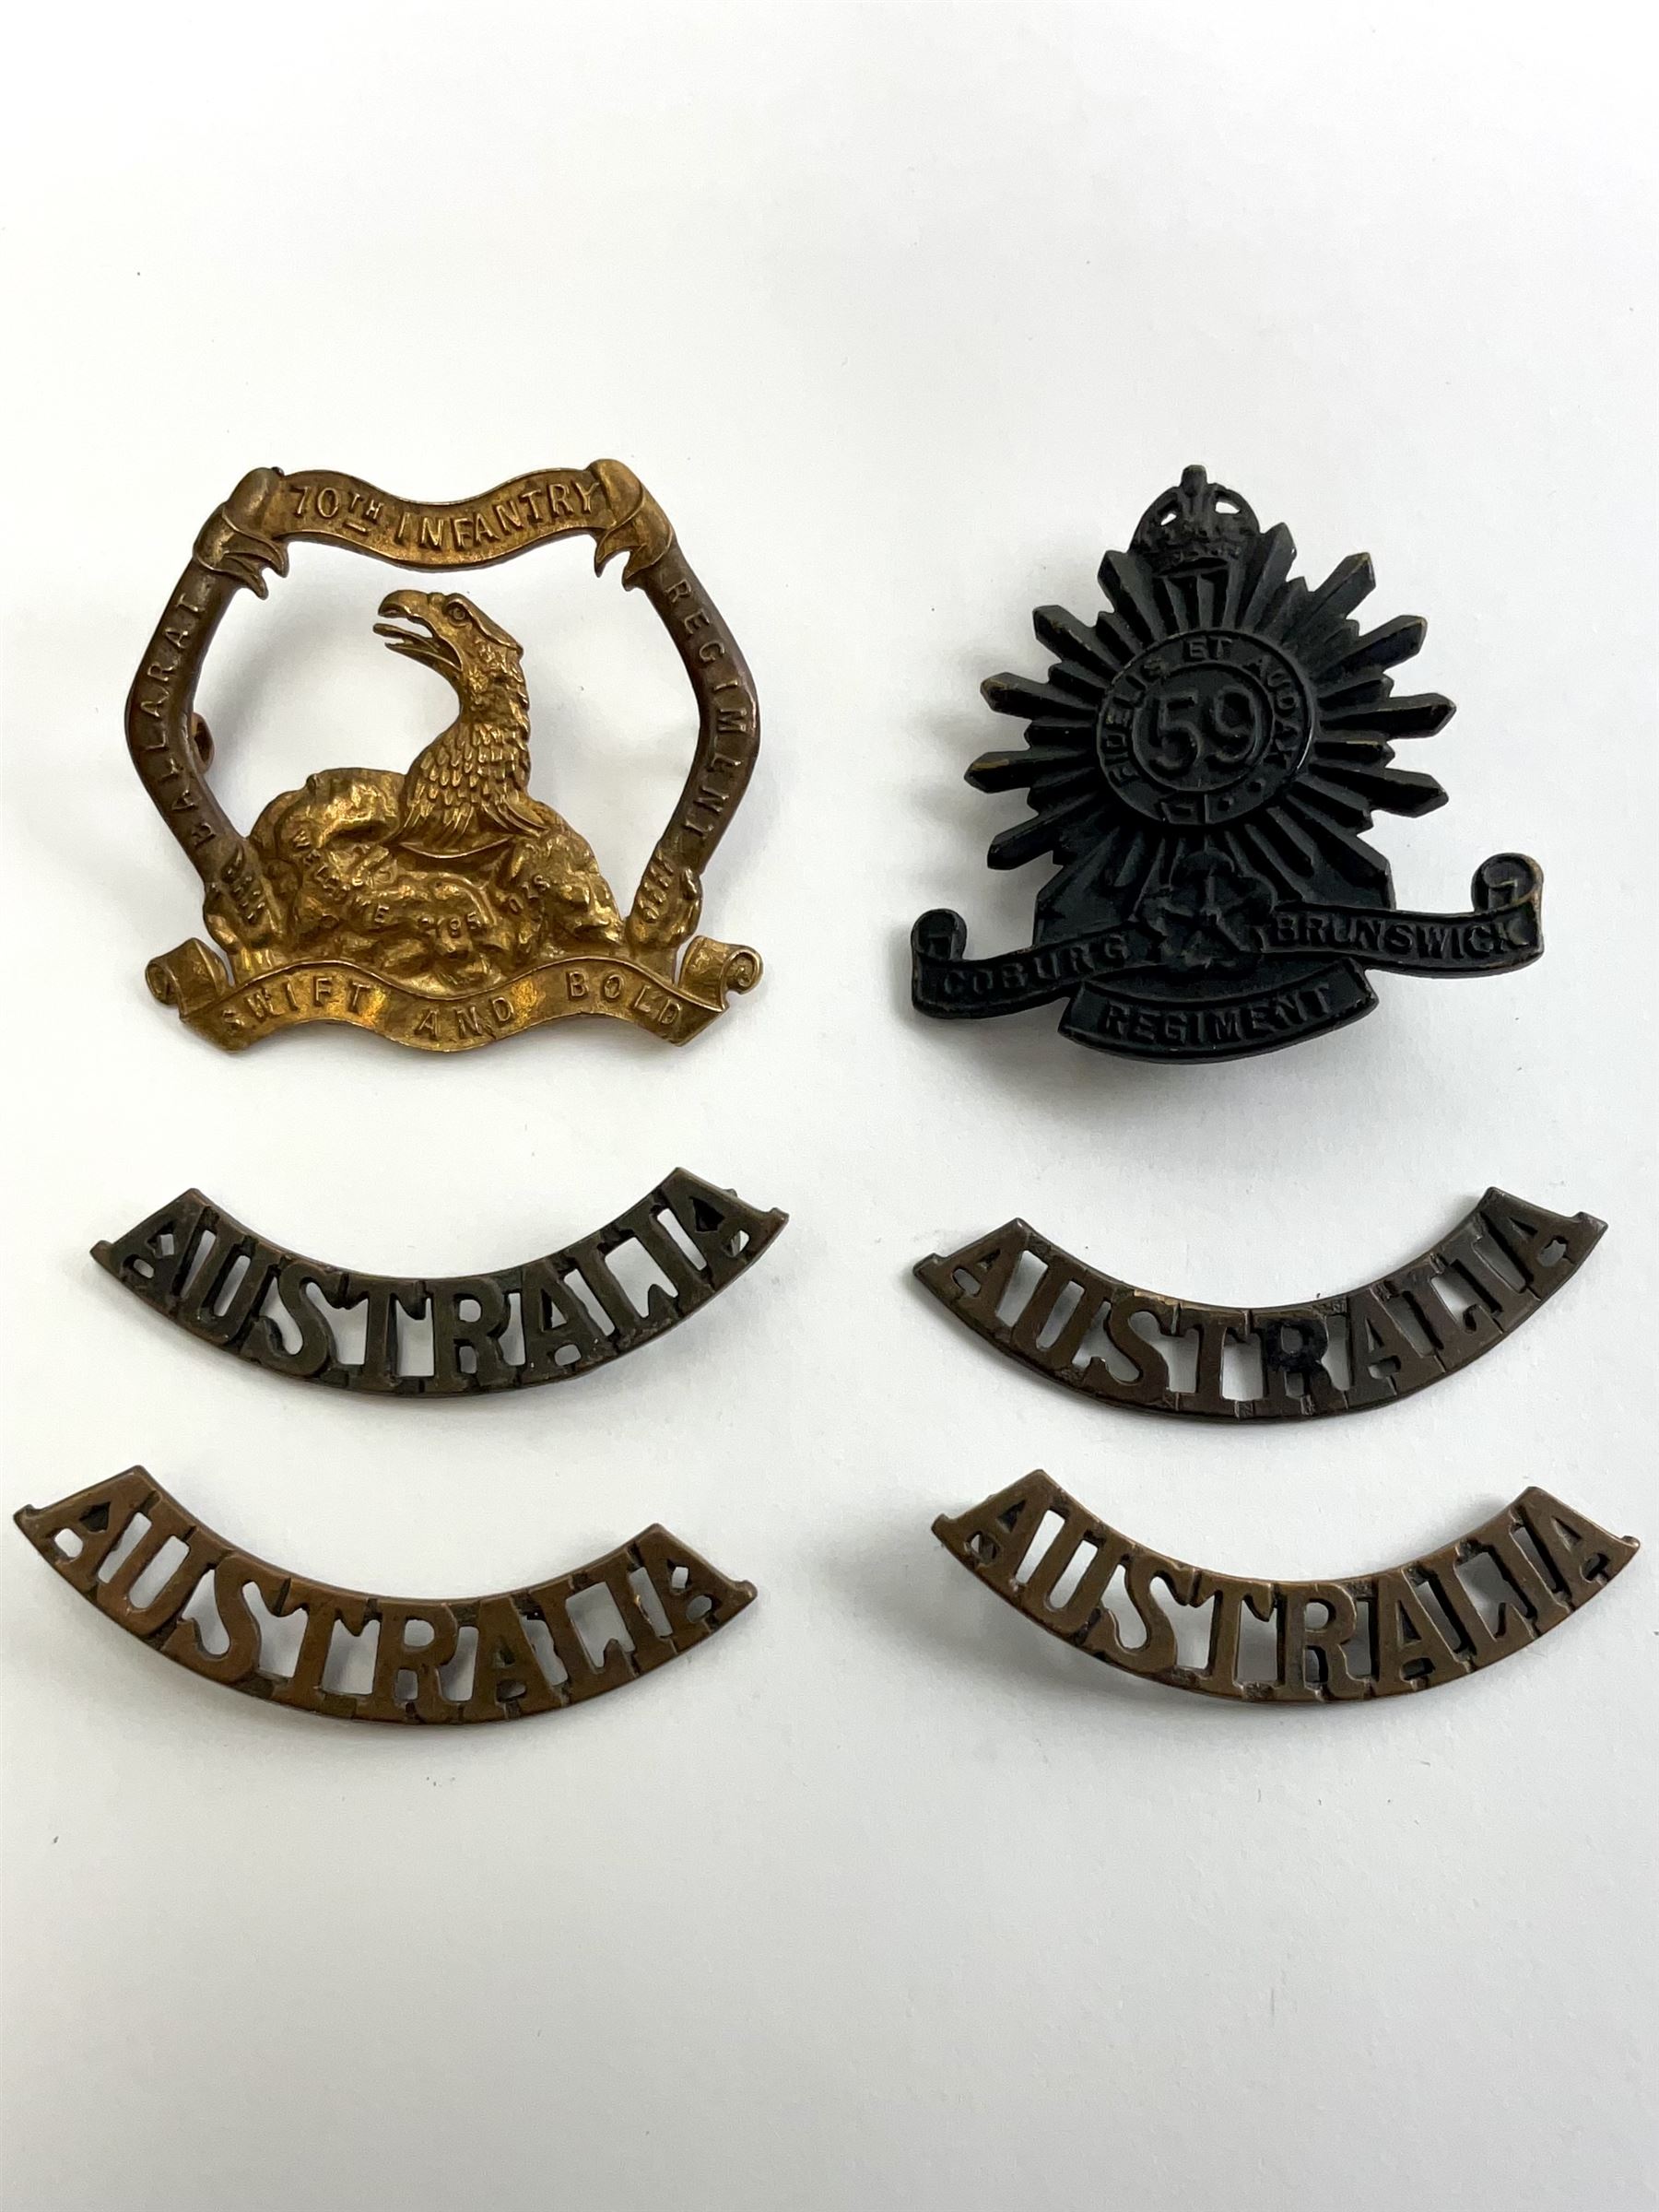 Two Australian cap badges comprising 59th Coburg/Brunswick regiment and 70th Infantry regiment - Image 2 of 5